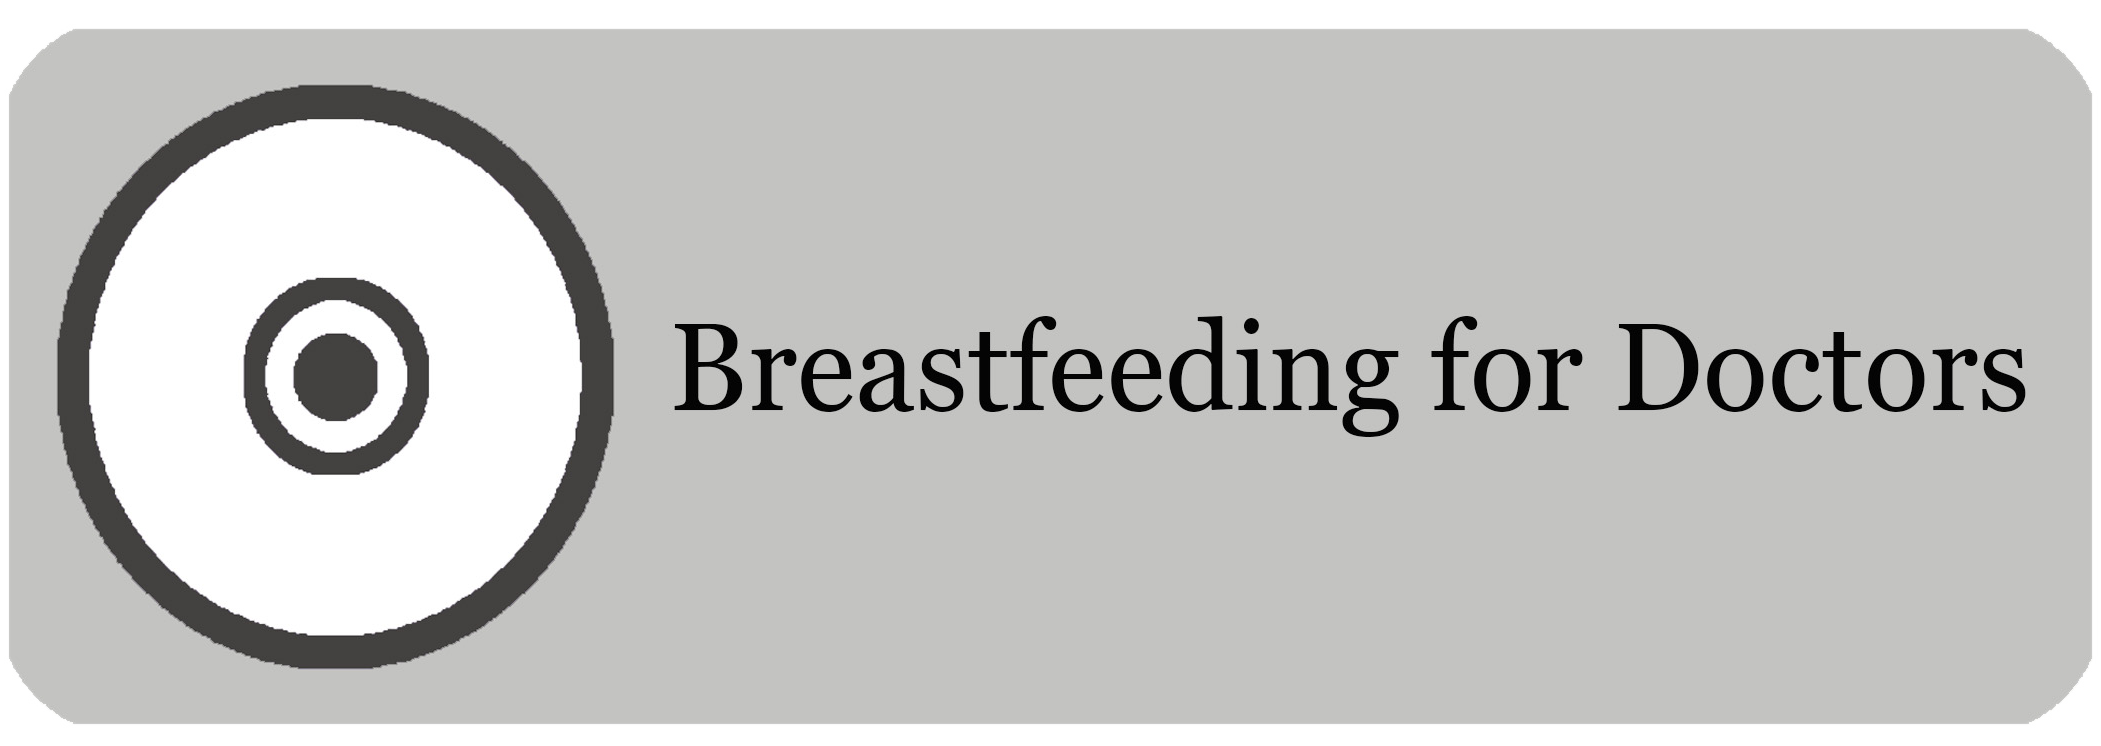 Breastfeeding for Doctors